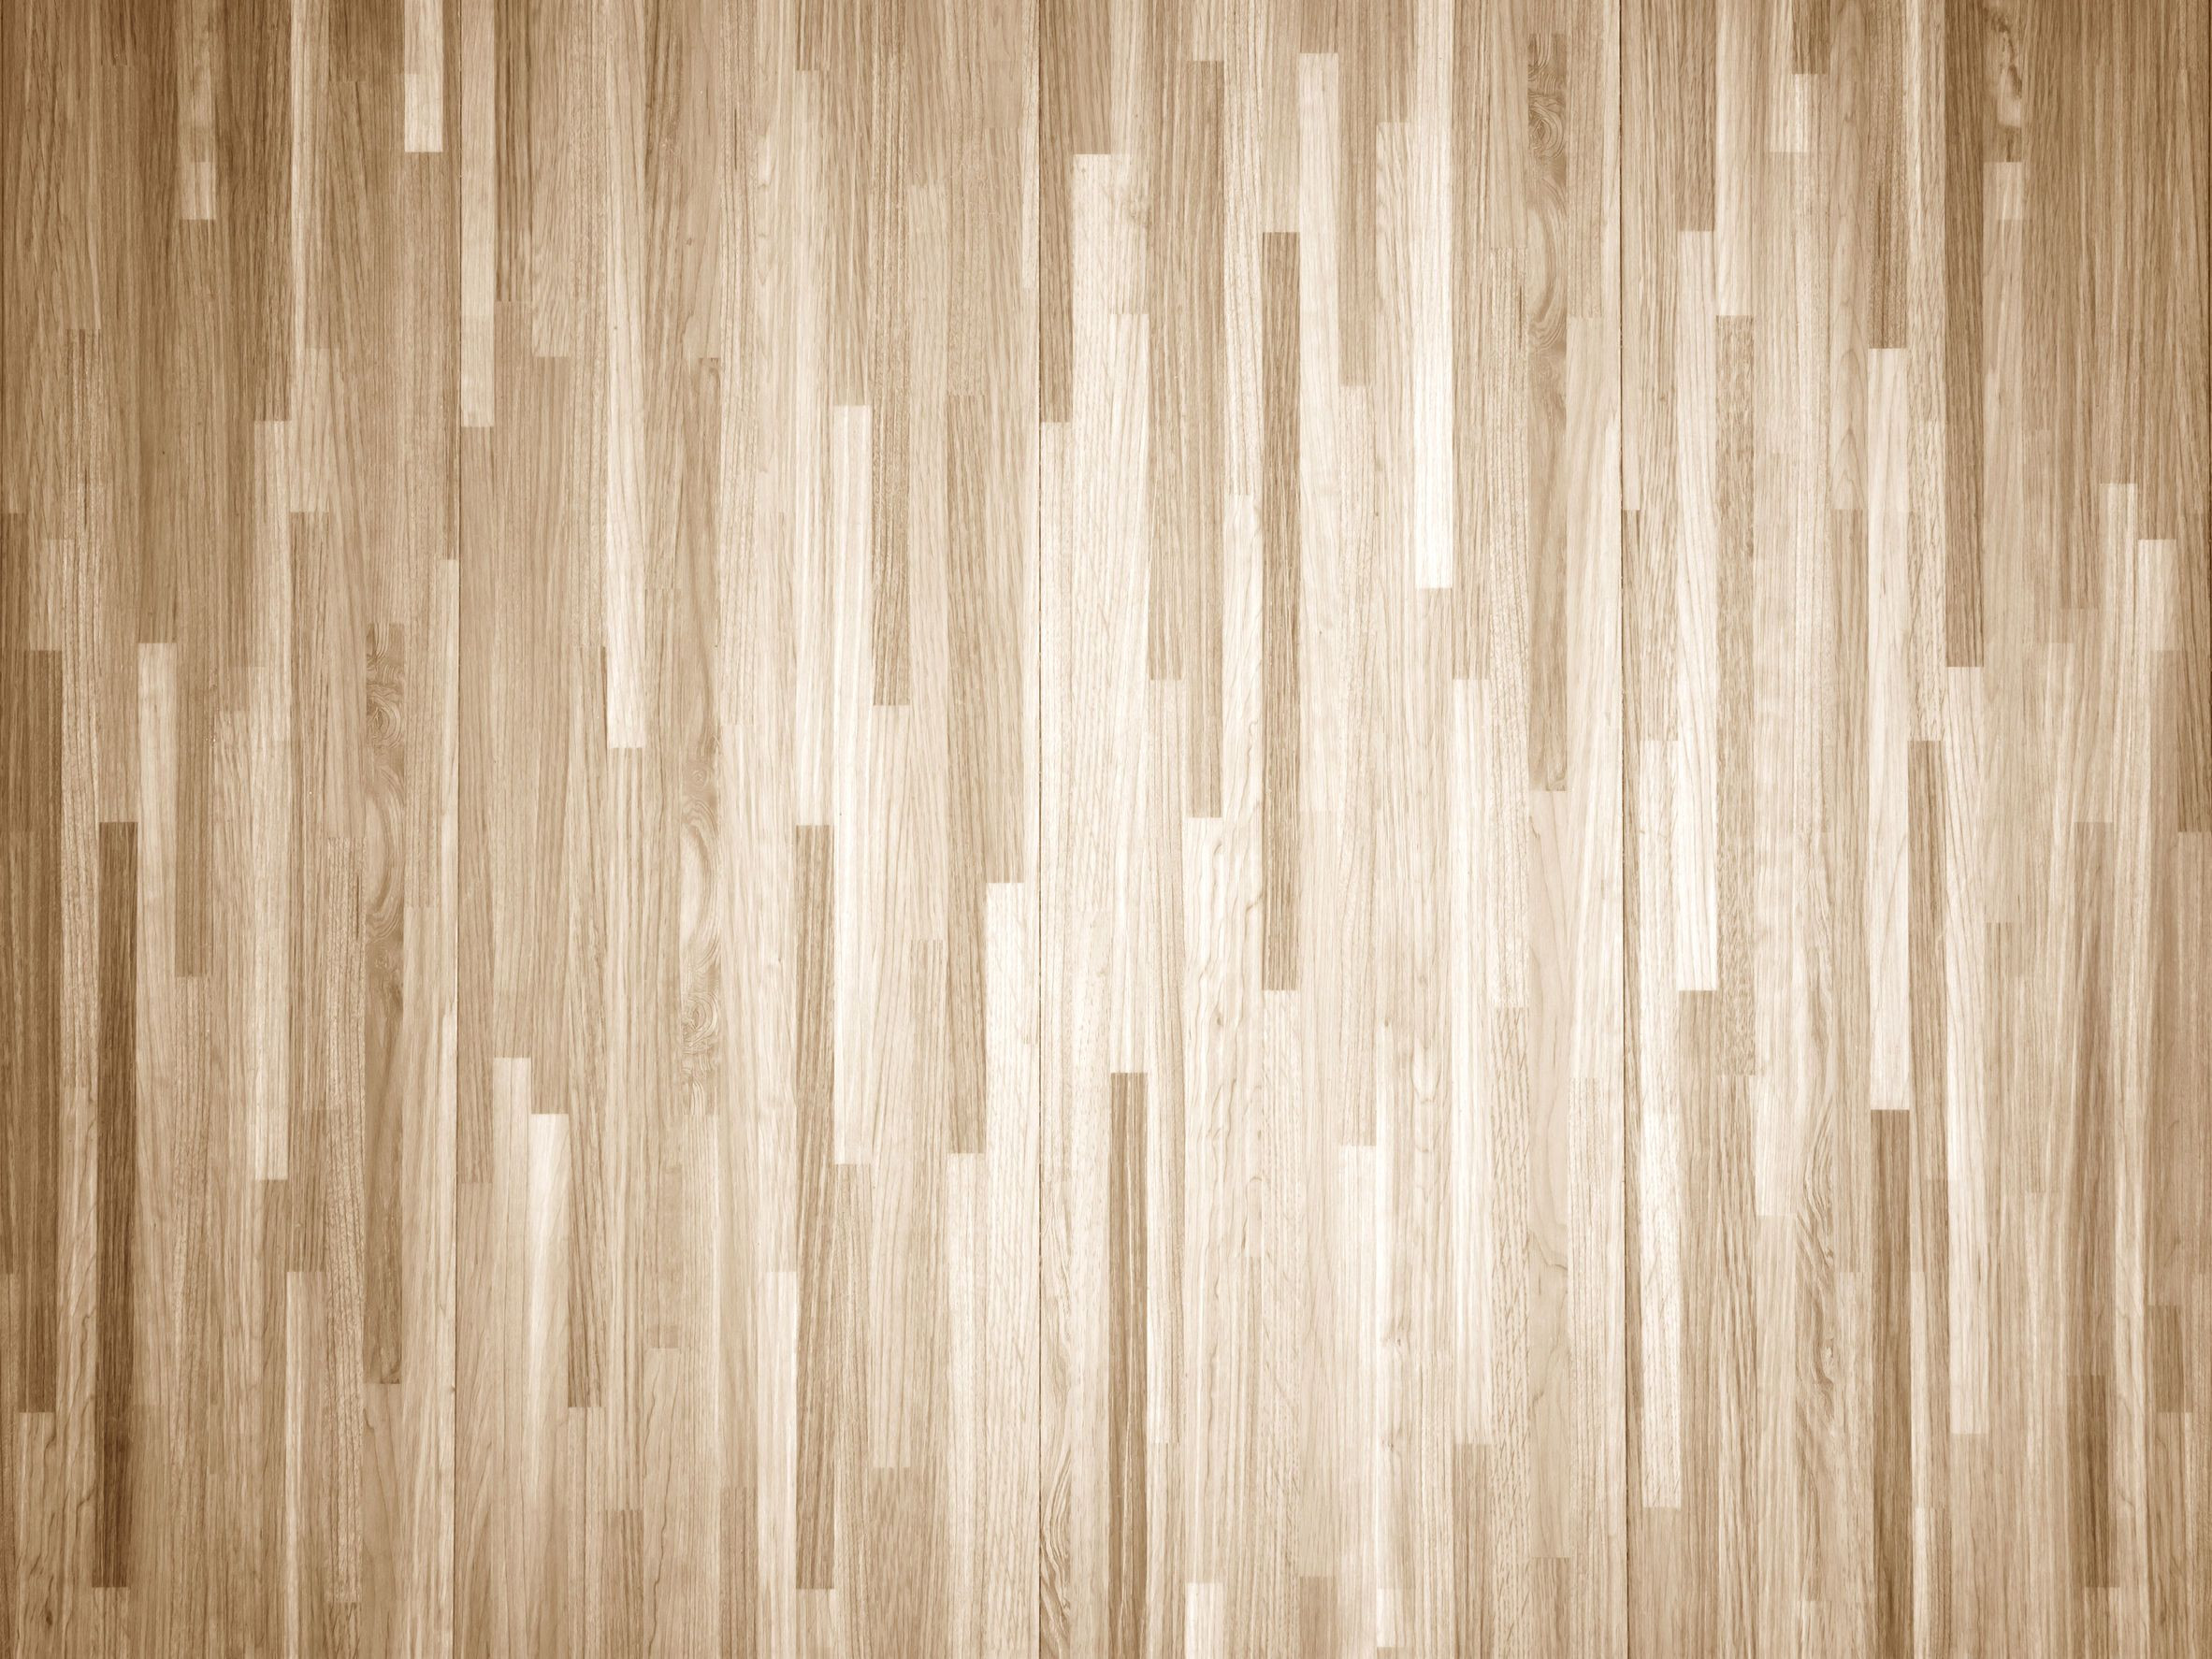 hardwood floor refinishing yakima wa of how to chemically strip wood floors woodfloordoctor com throughout you